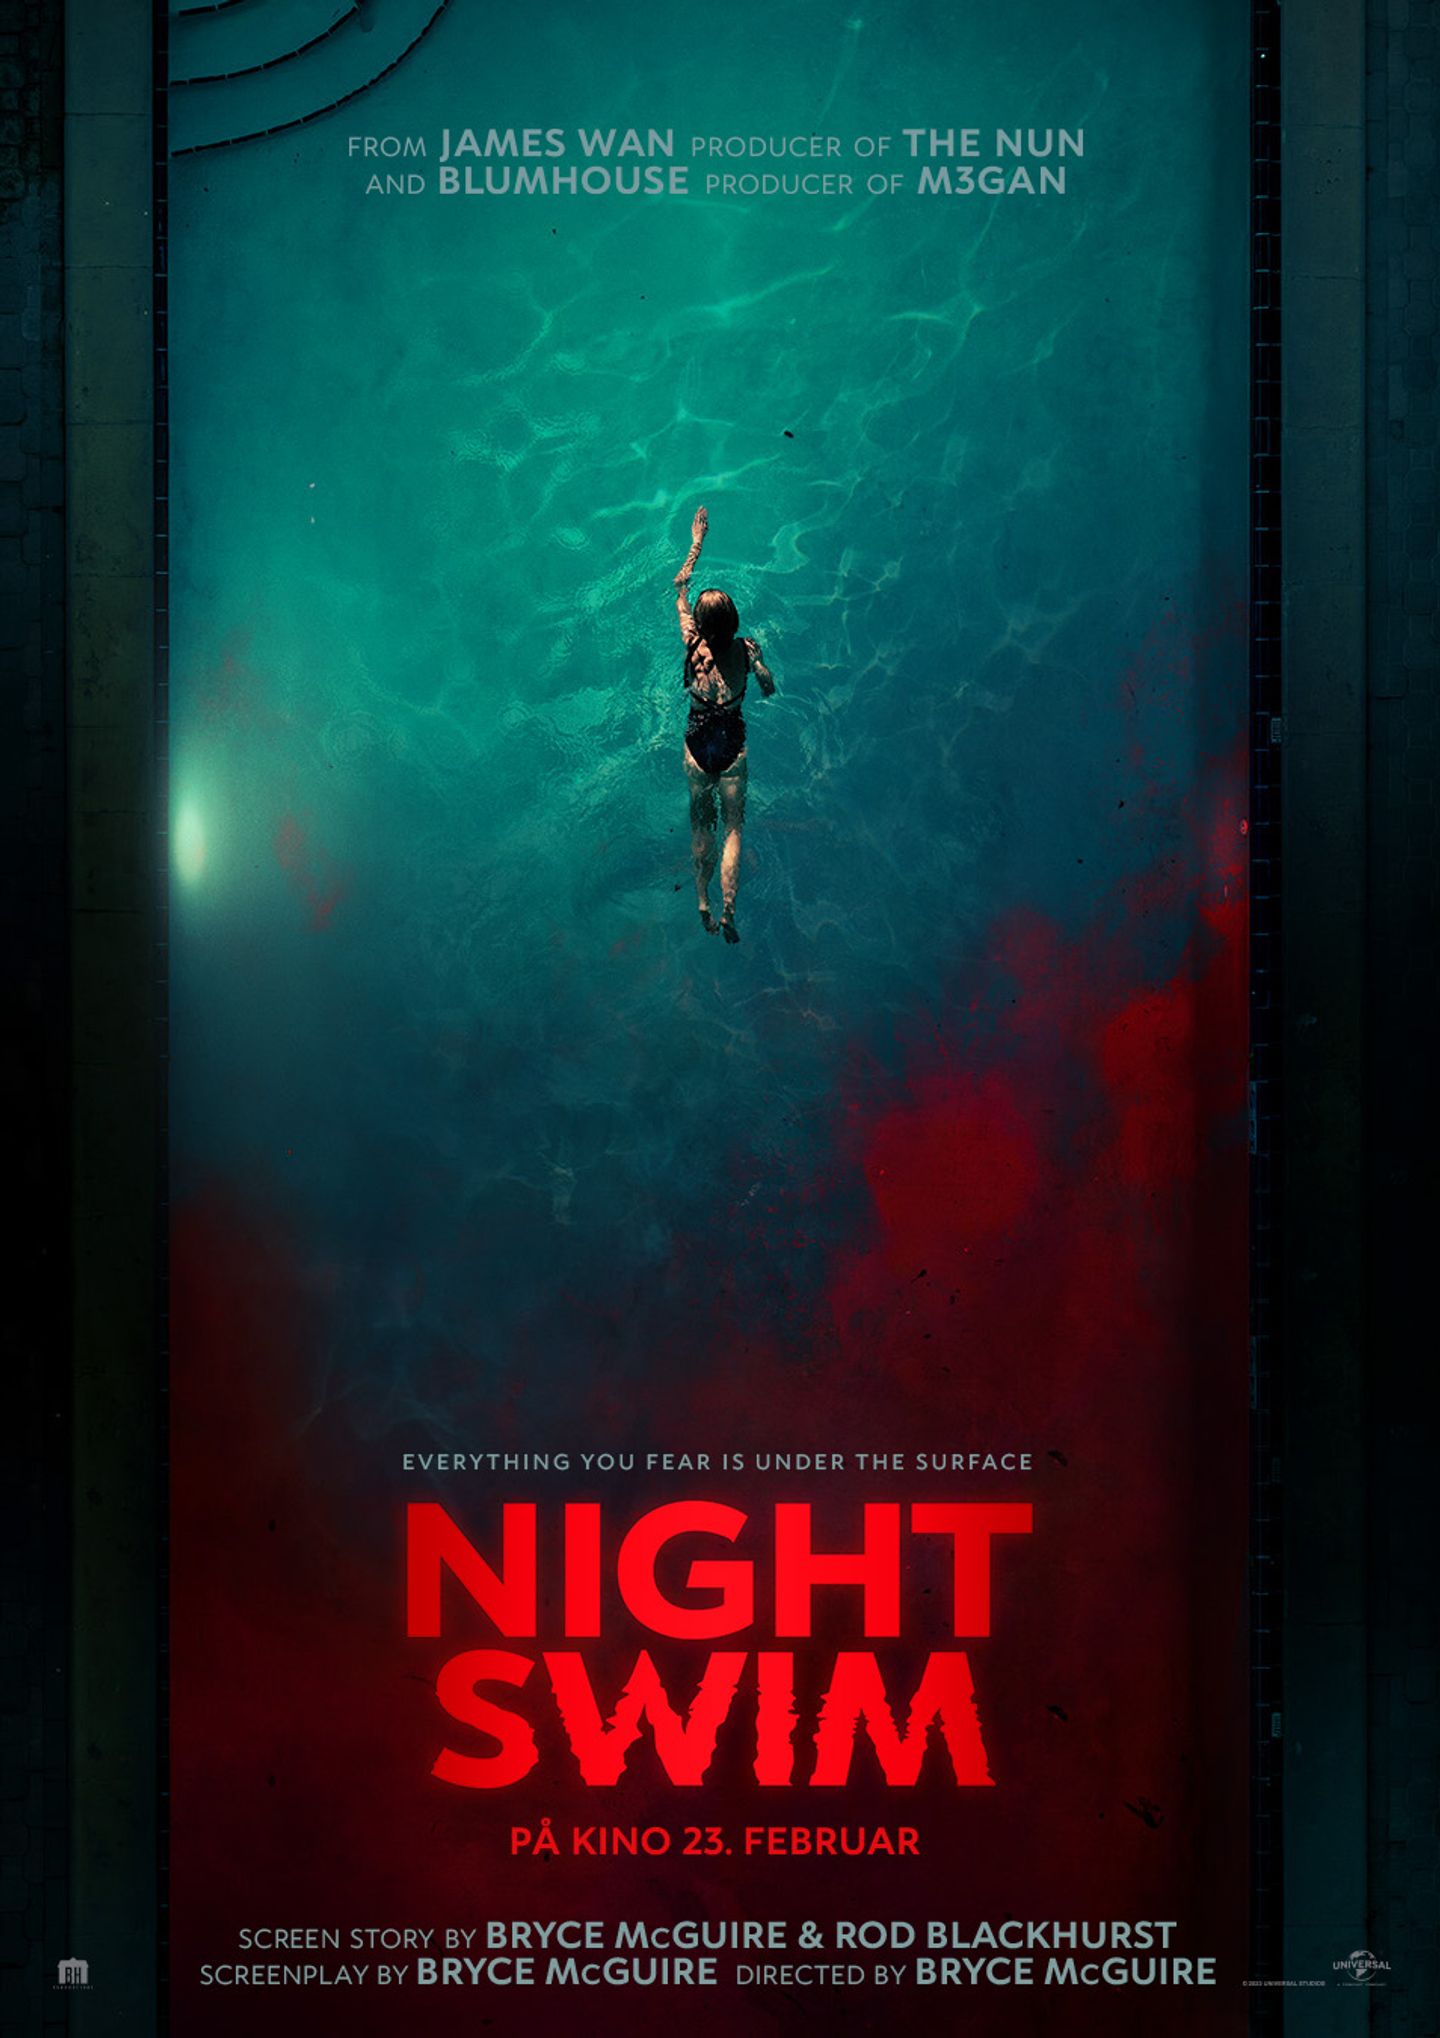 Plakat for 'Night Swim'